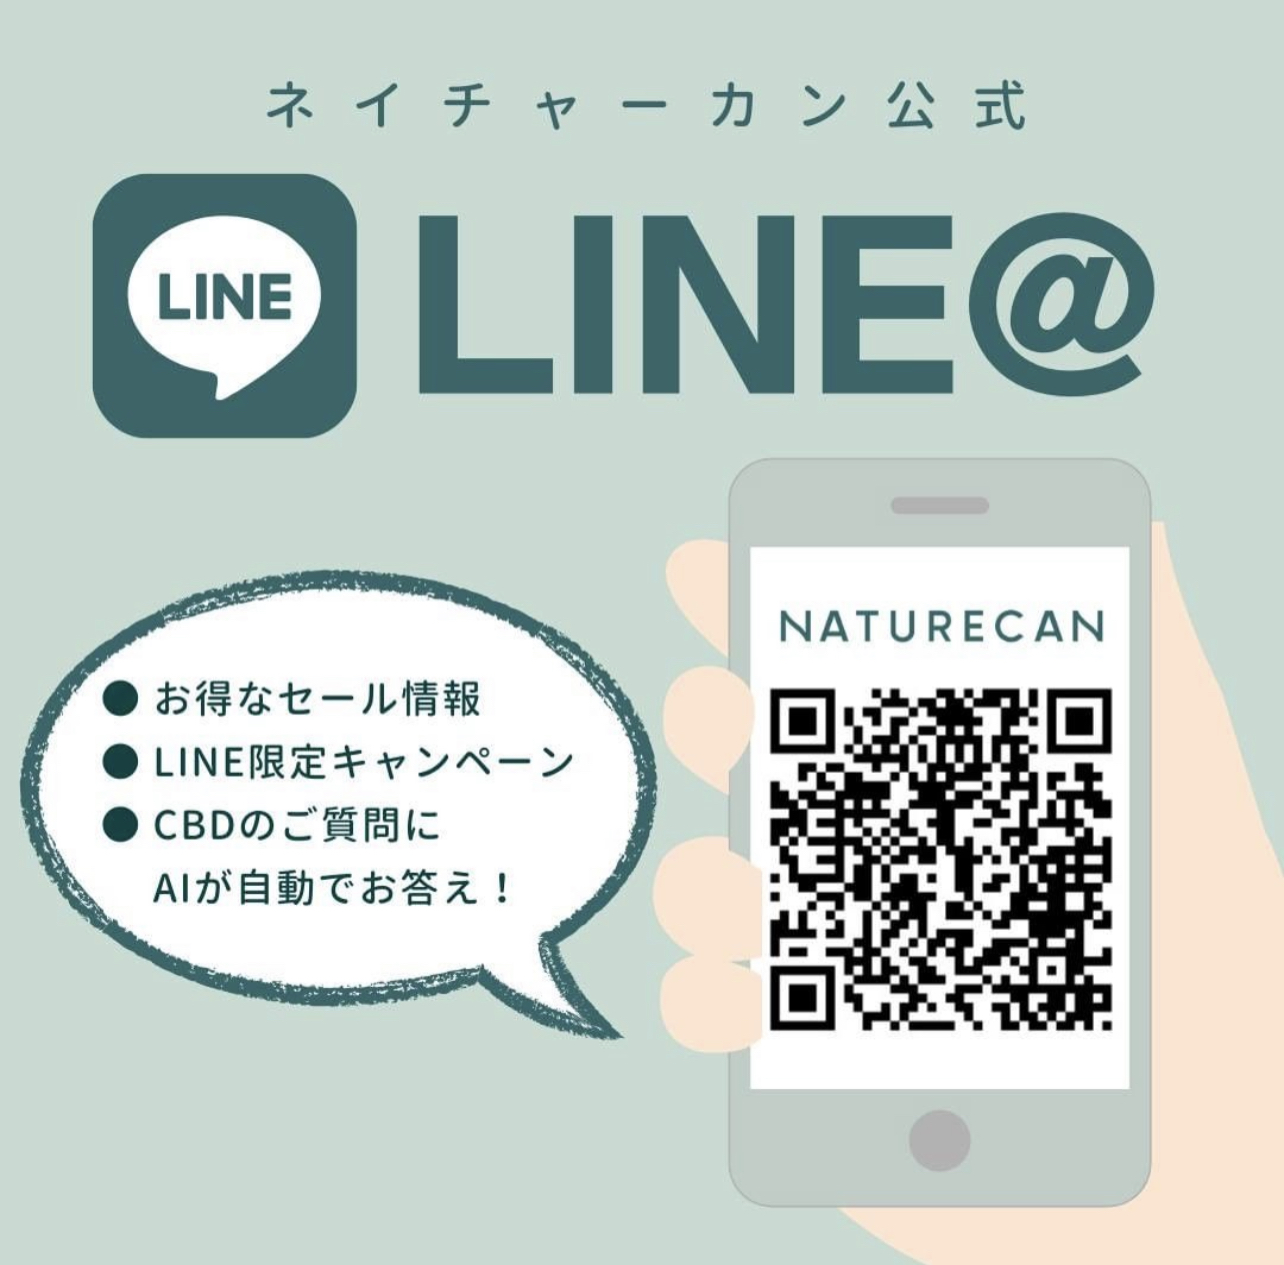 Naturecan(ネイチャーカン)のLINE@限定クーポン